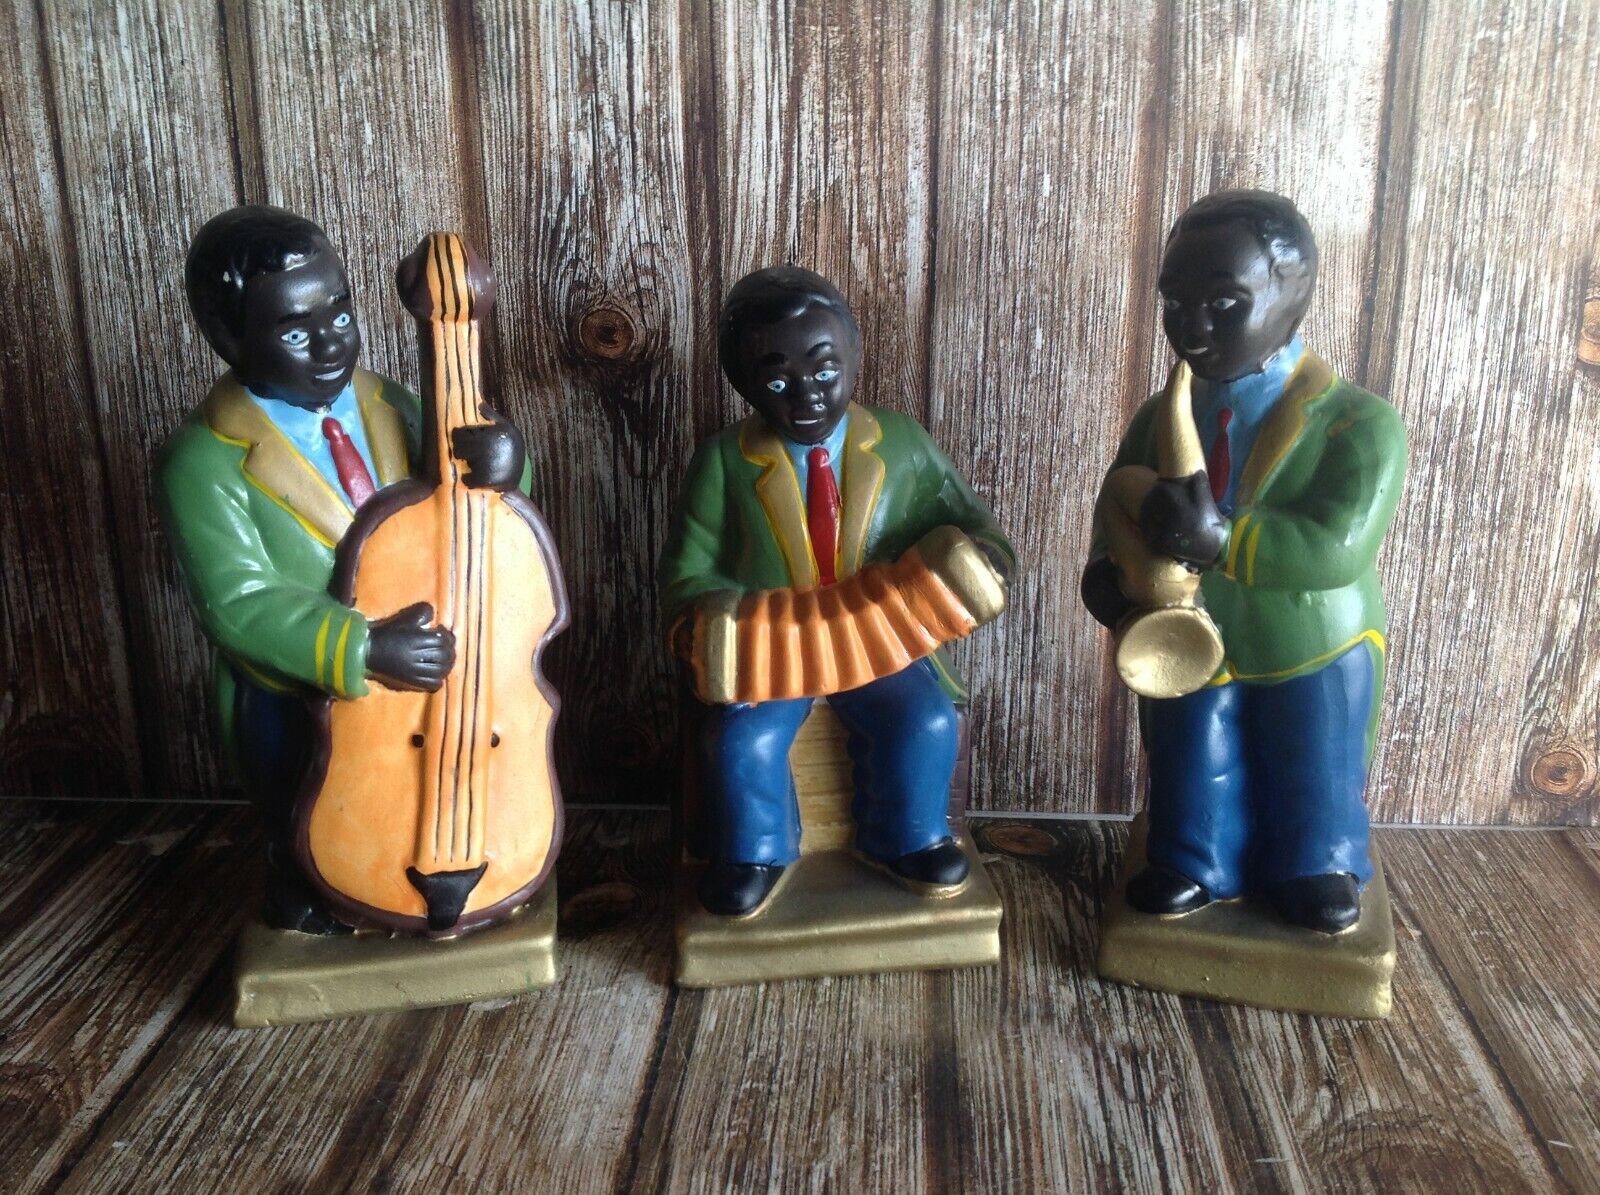 Black Musician Jazz Band 3 piece figurine ornament statue vintage ceramic set